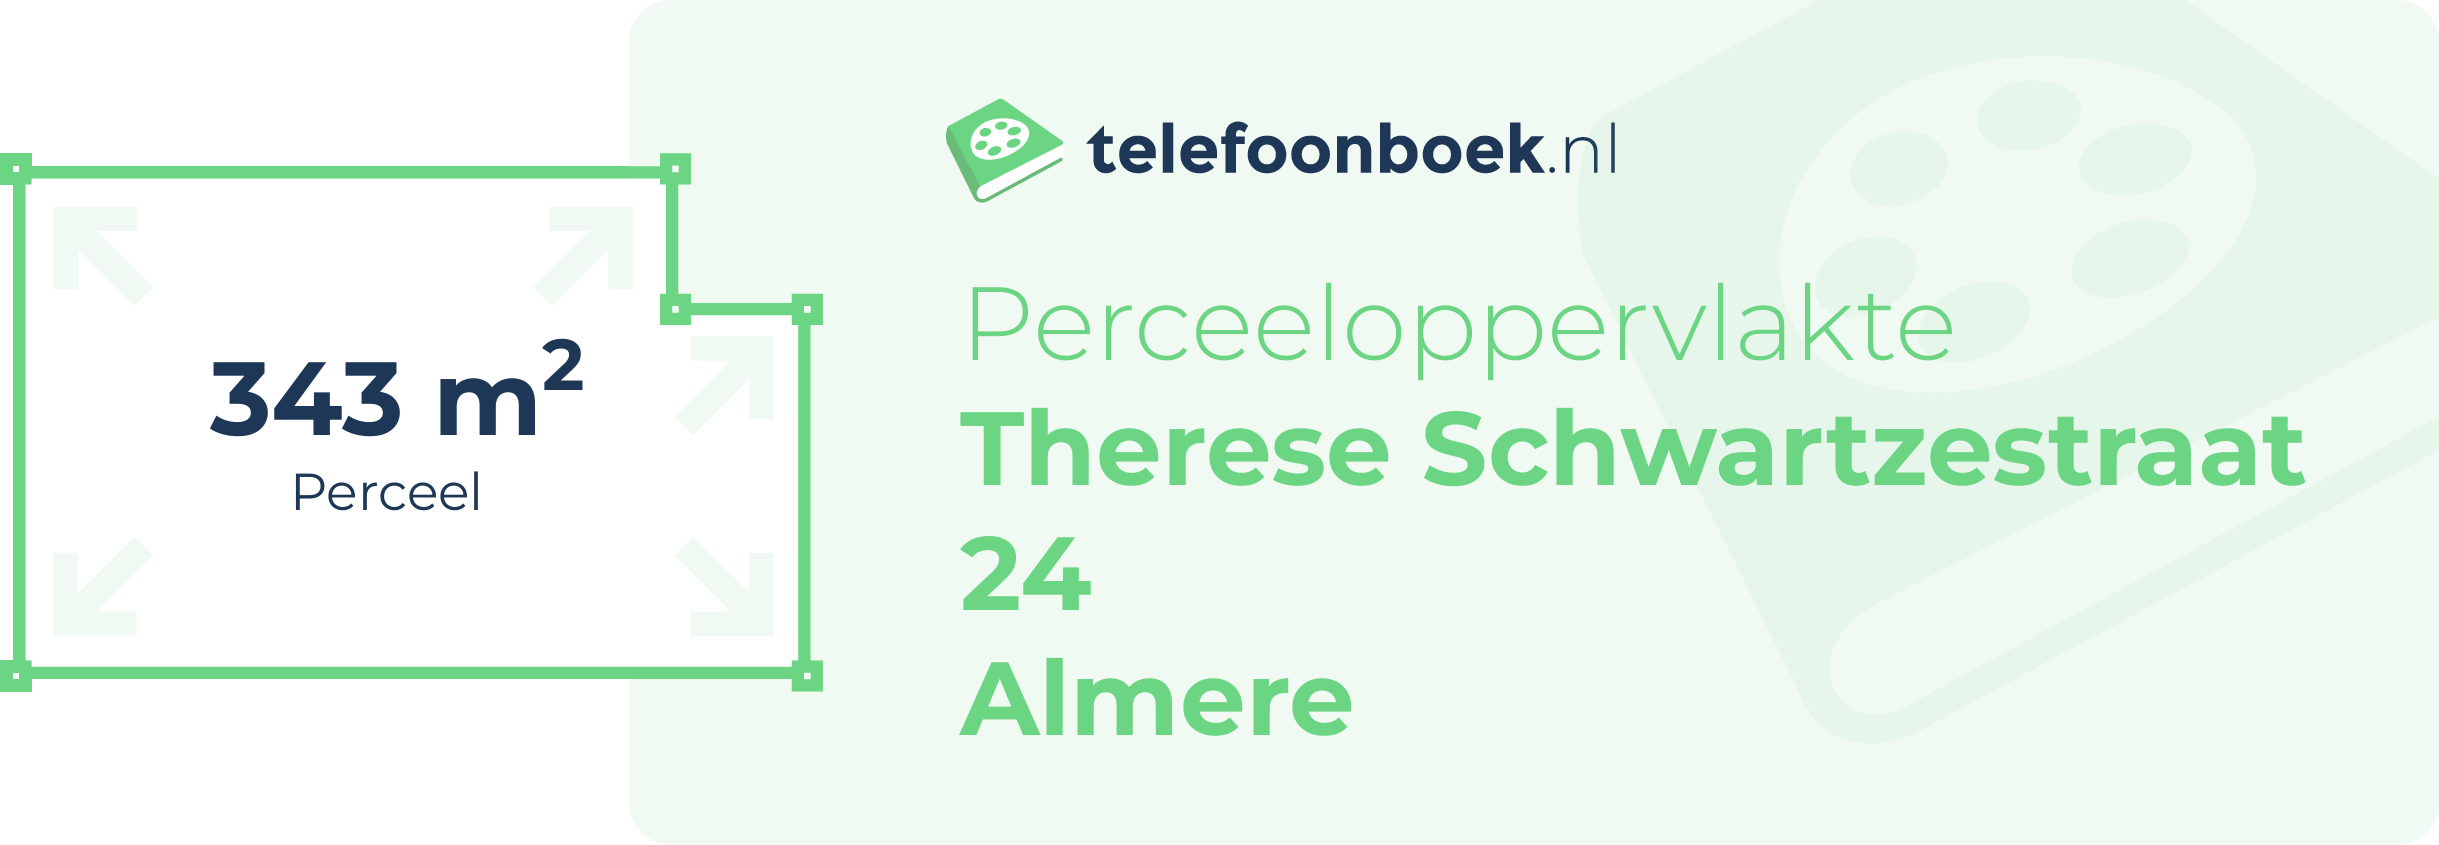 Perceeloppervlakte Therese Schwartzestraat 24 Almere